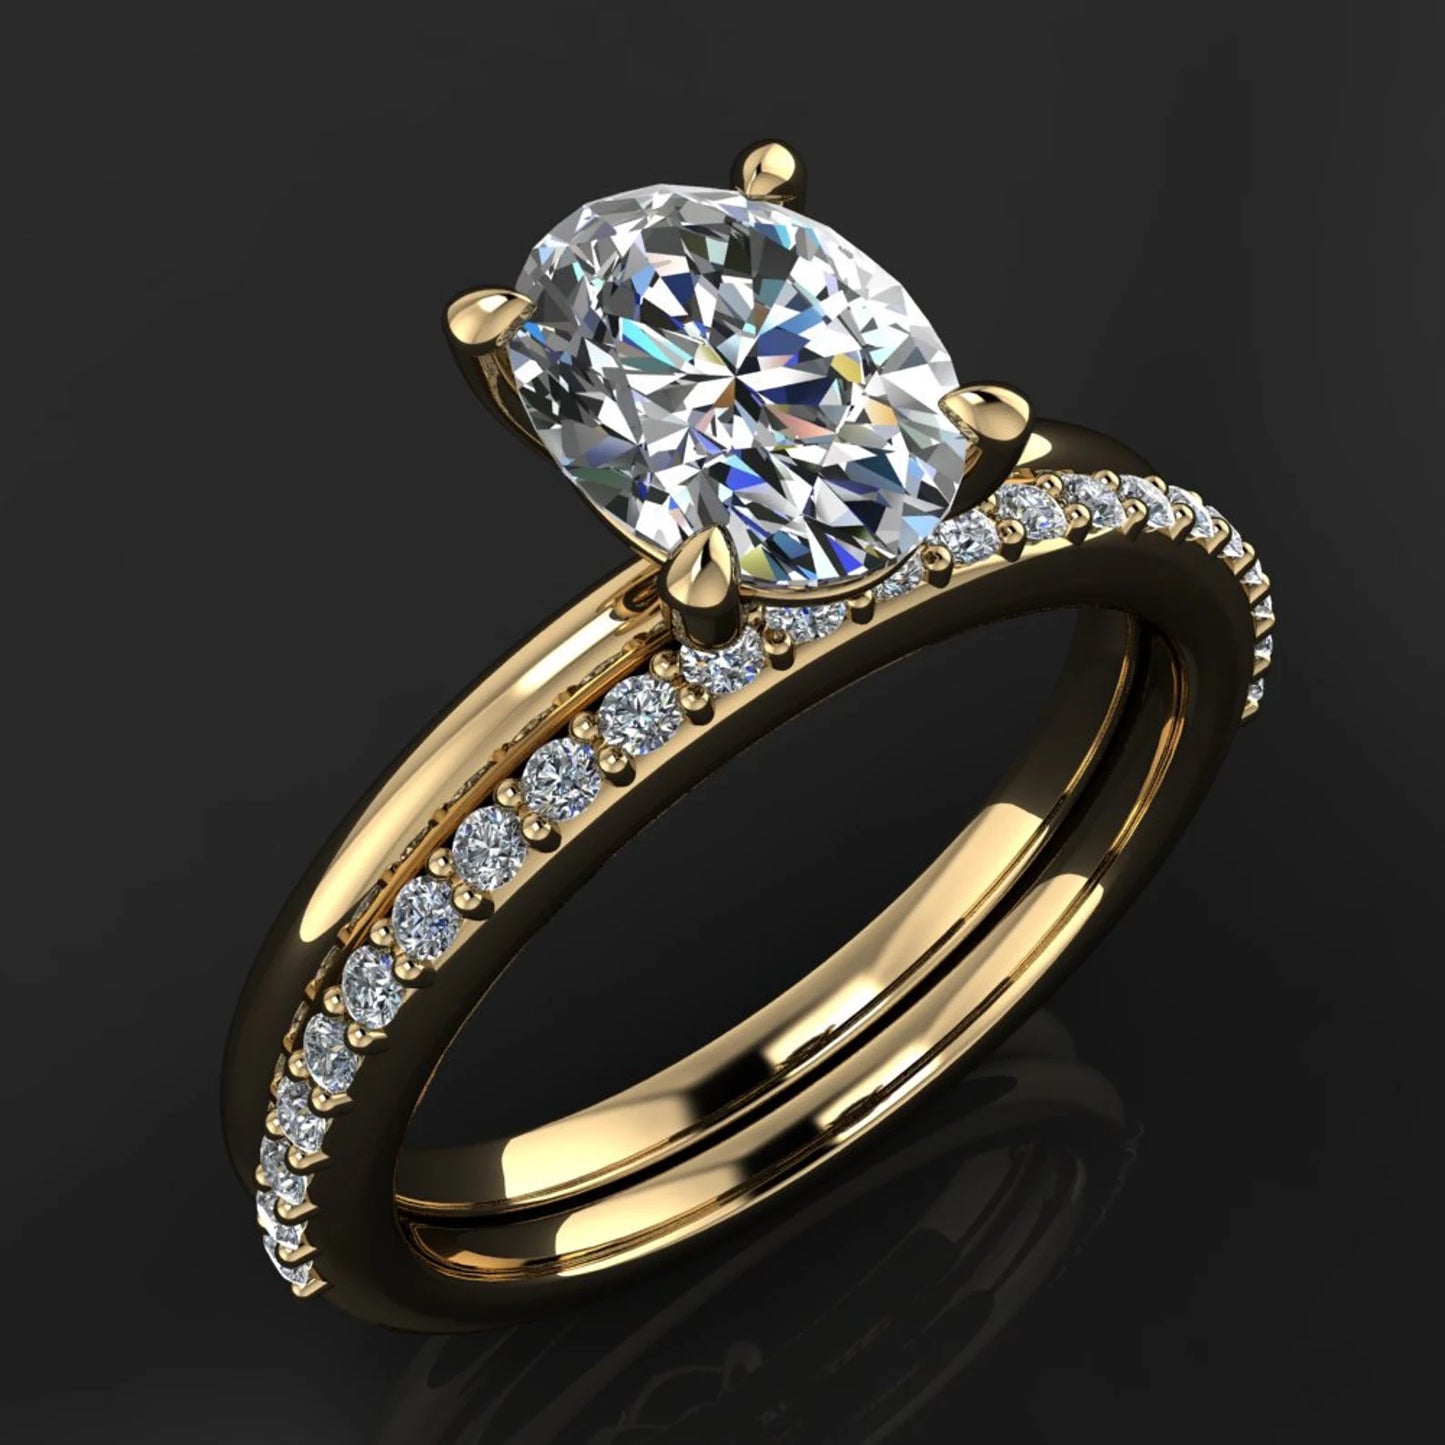 naked shay ring – 1.5 carat lab grown diamond engagement ring - J Hollywood Designs